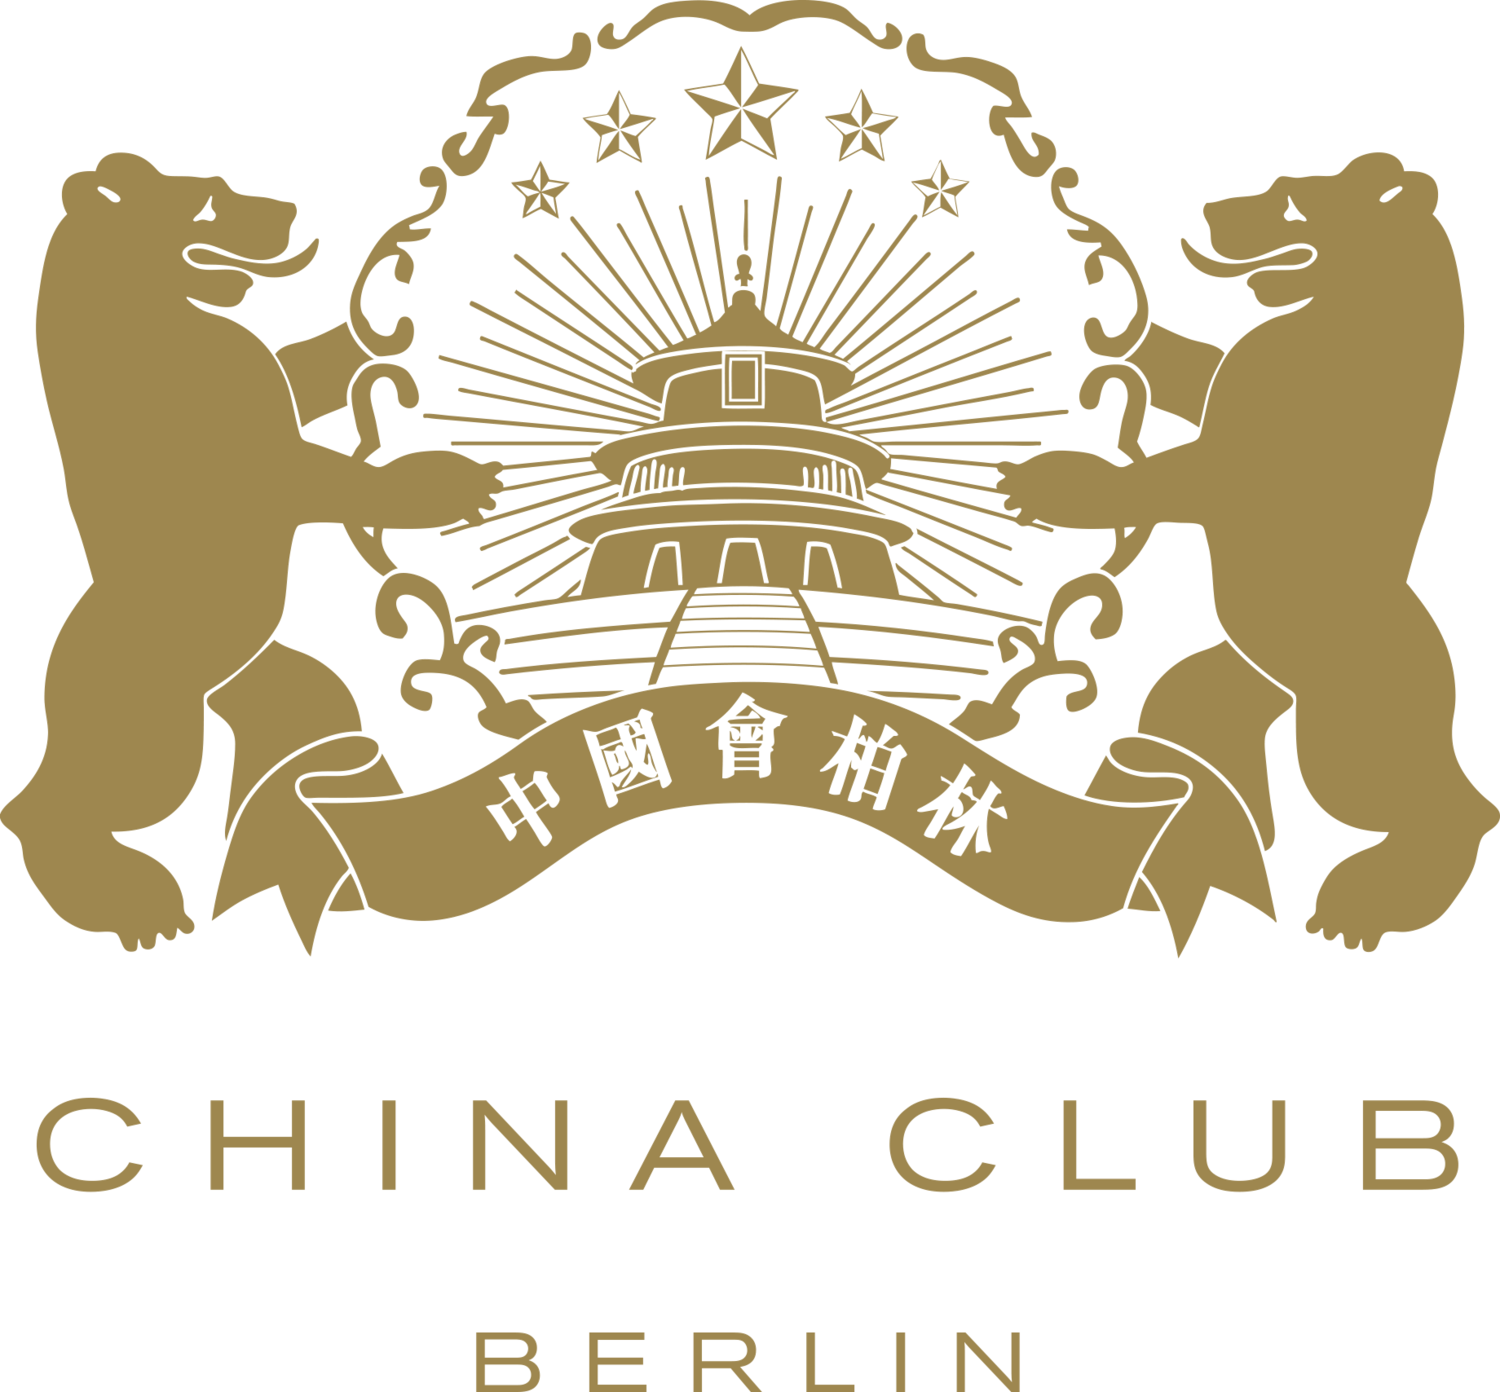 CHINA CLUB BERLIN image